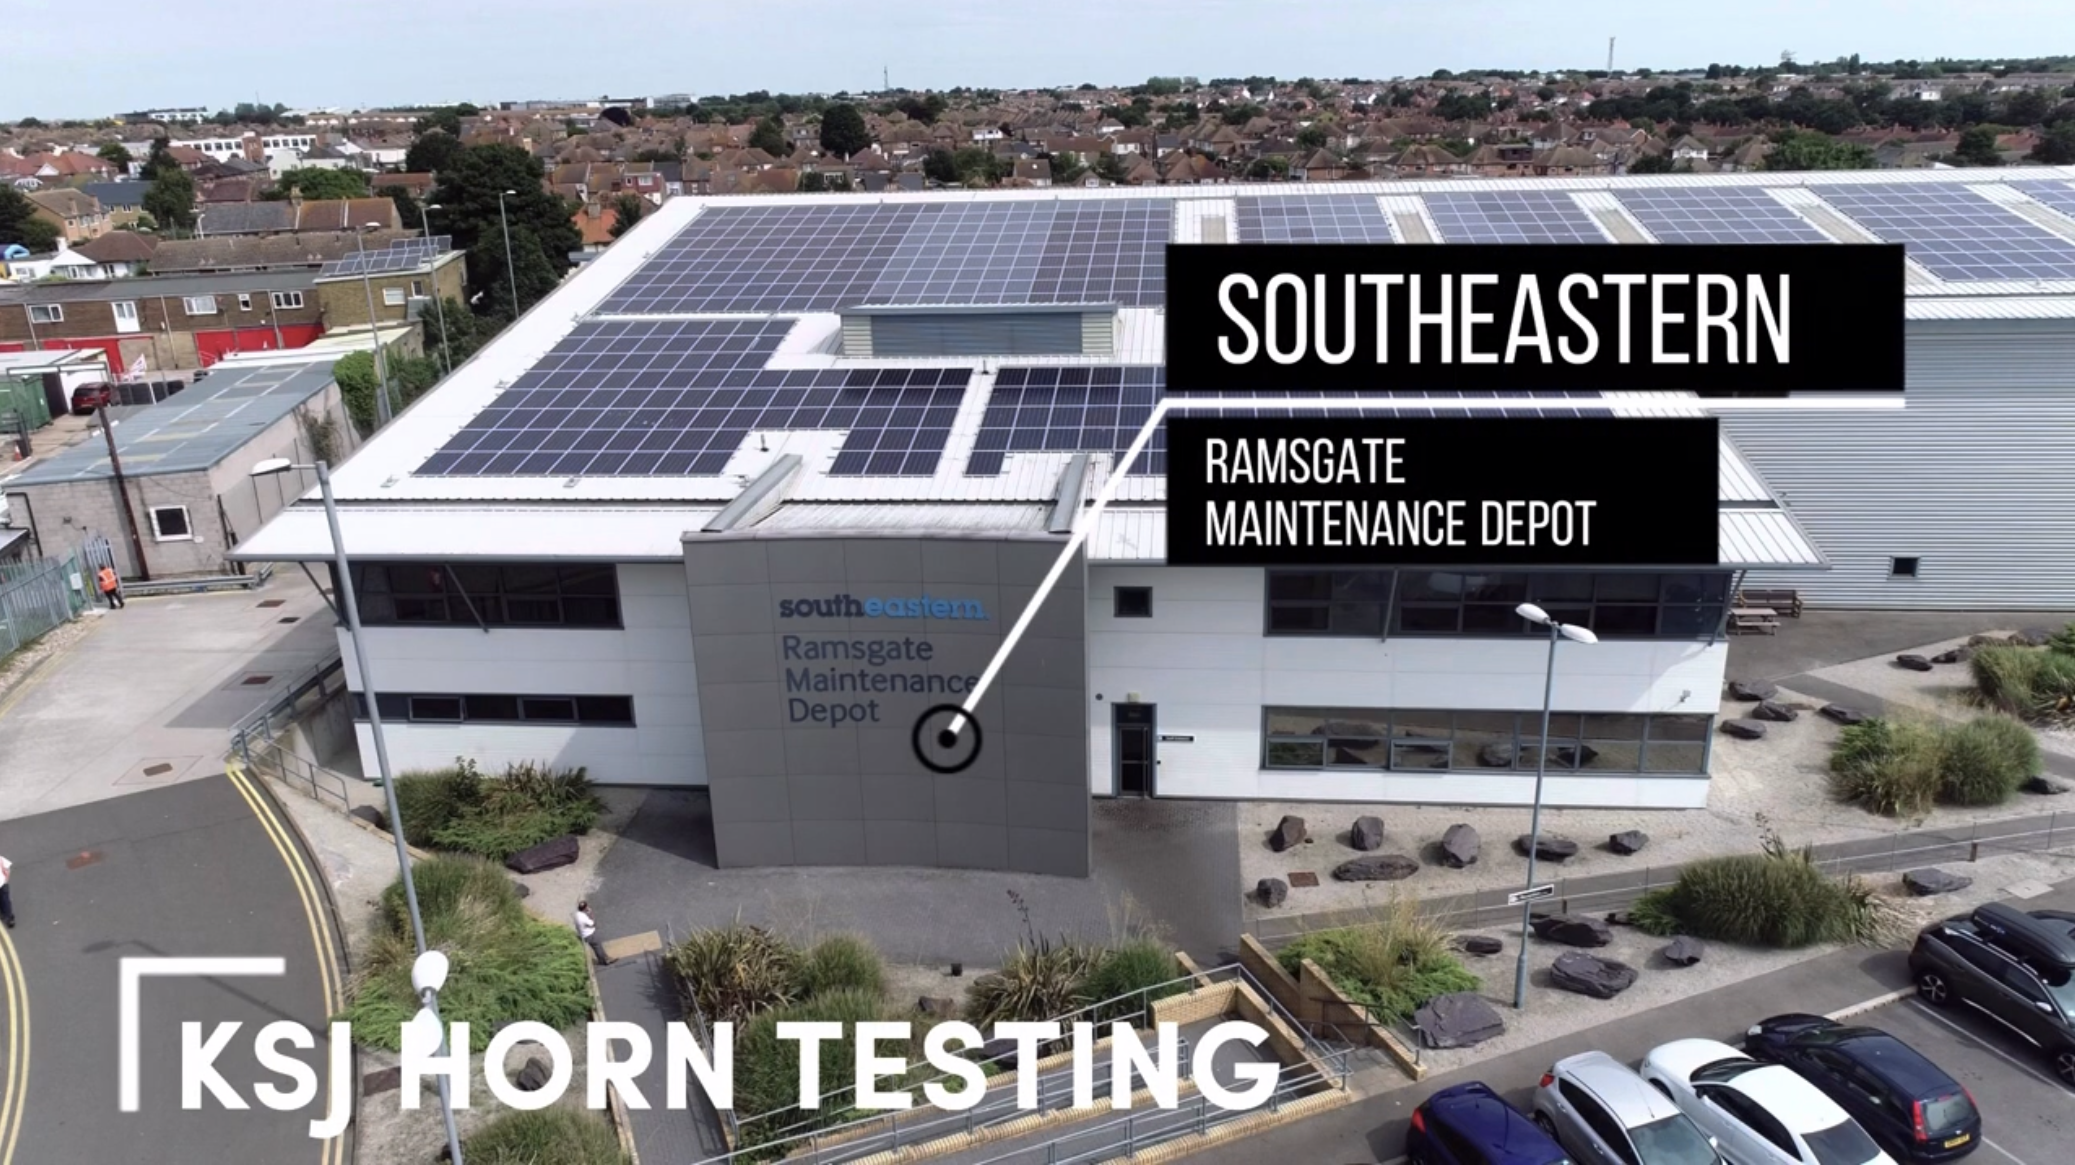 KSJ Horn testing at Southeastern Maintenance Depot - Ramsgate UK